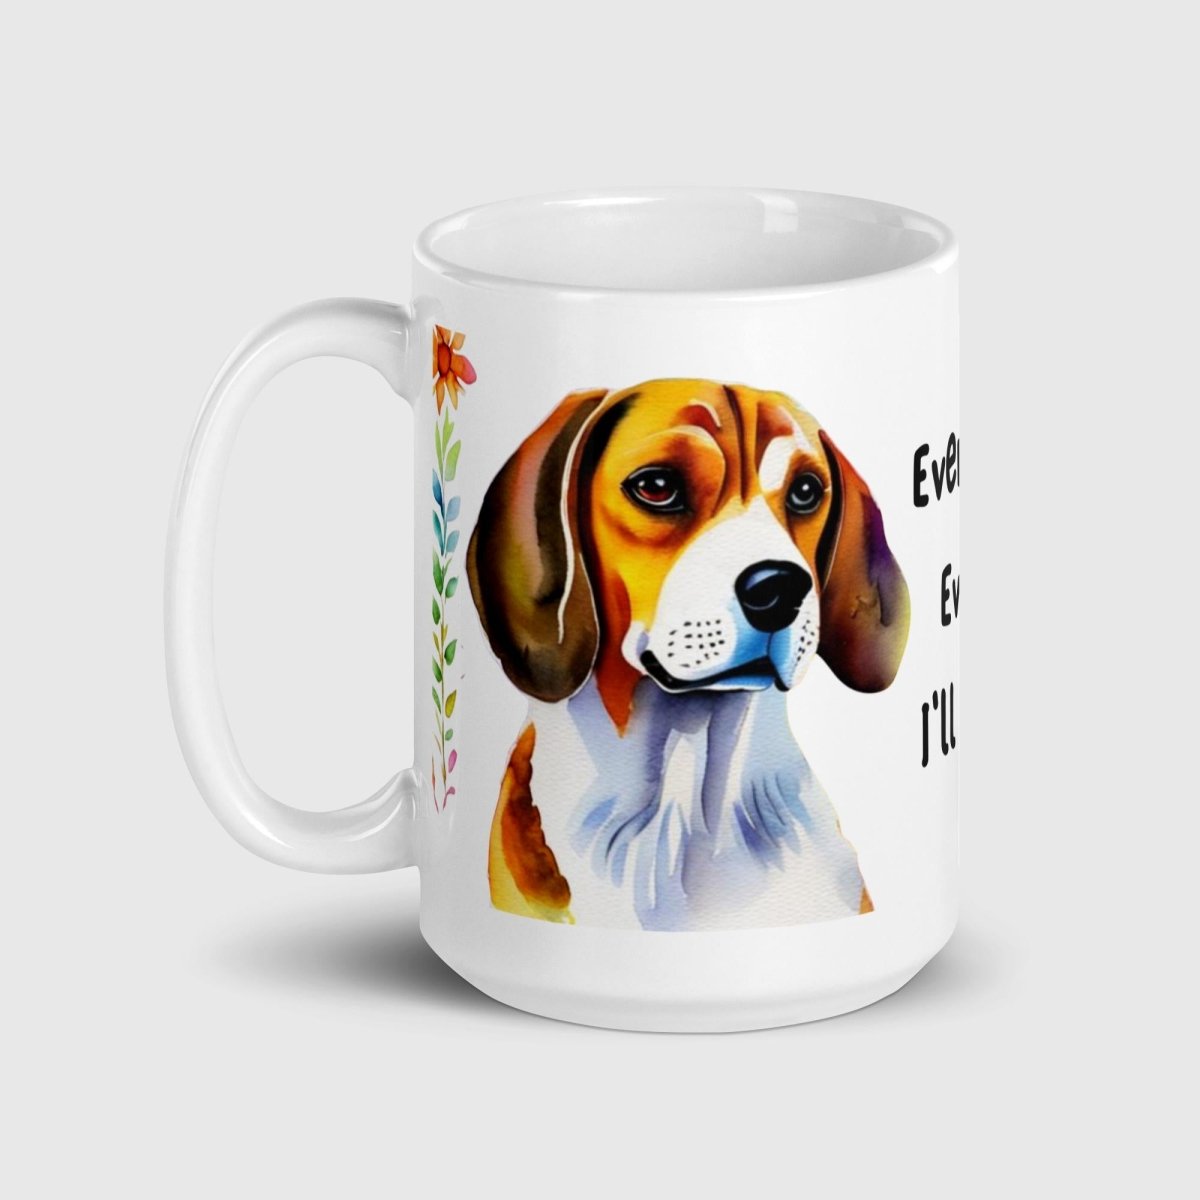 Every Sip Beagle Mug - Funny Nikko